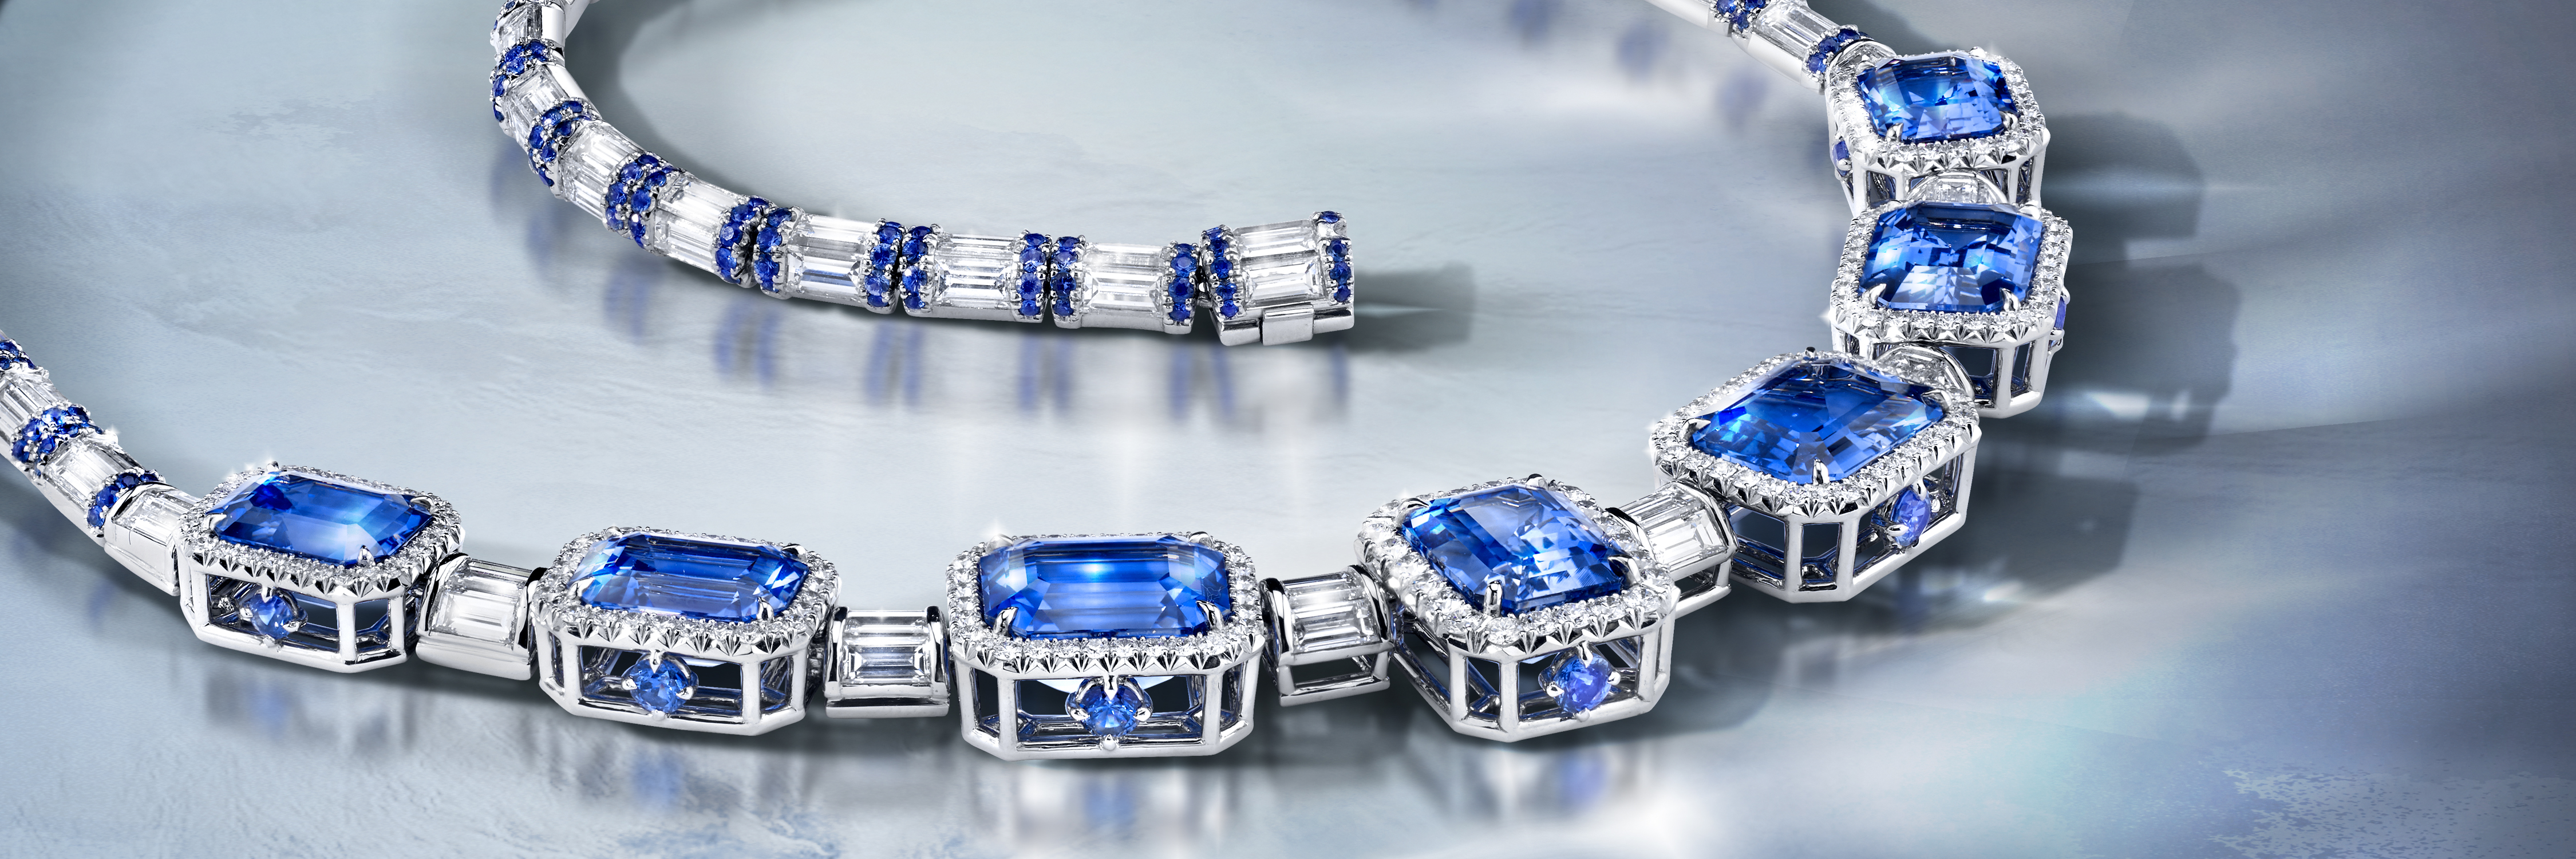 blue sapphire necklace ad, blue sapphire necklace photograph, jewelry ad, creative jewelry ad